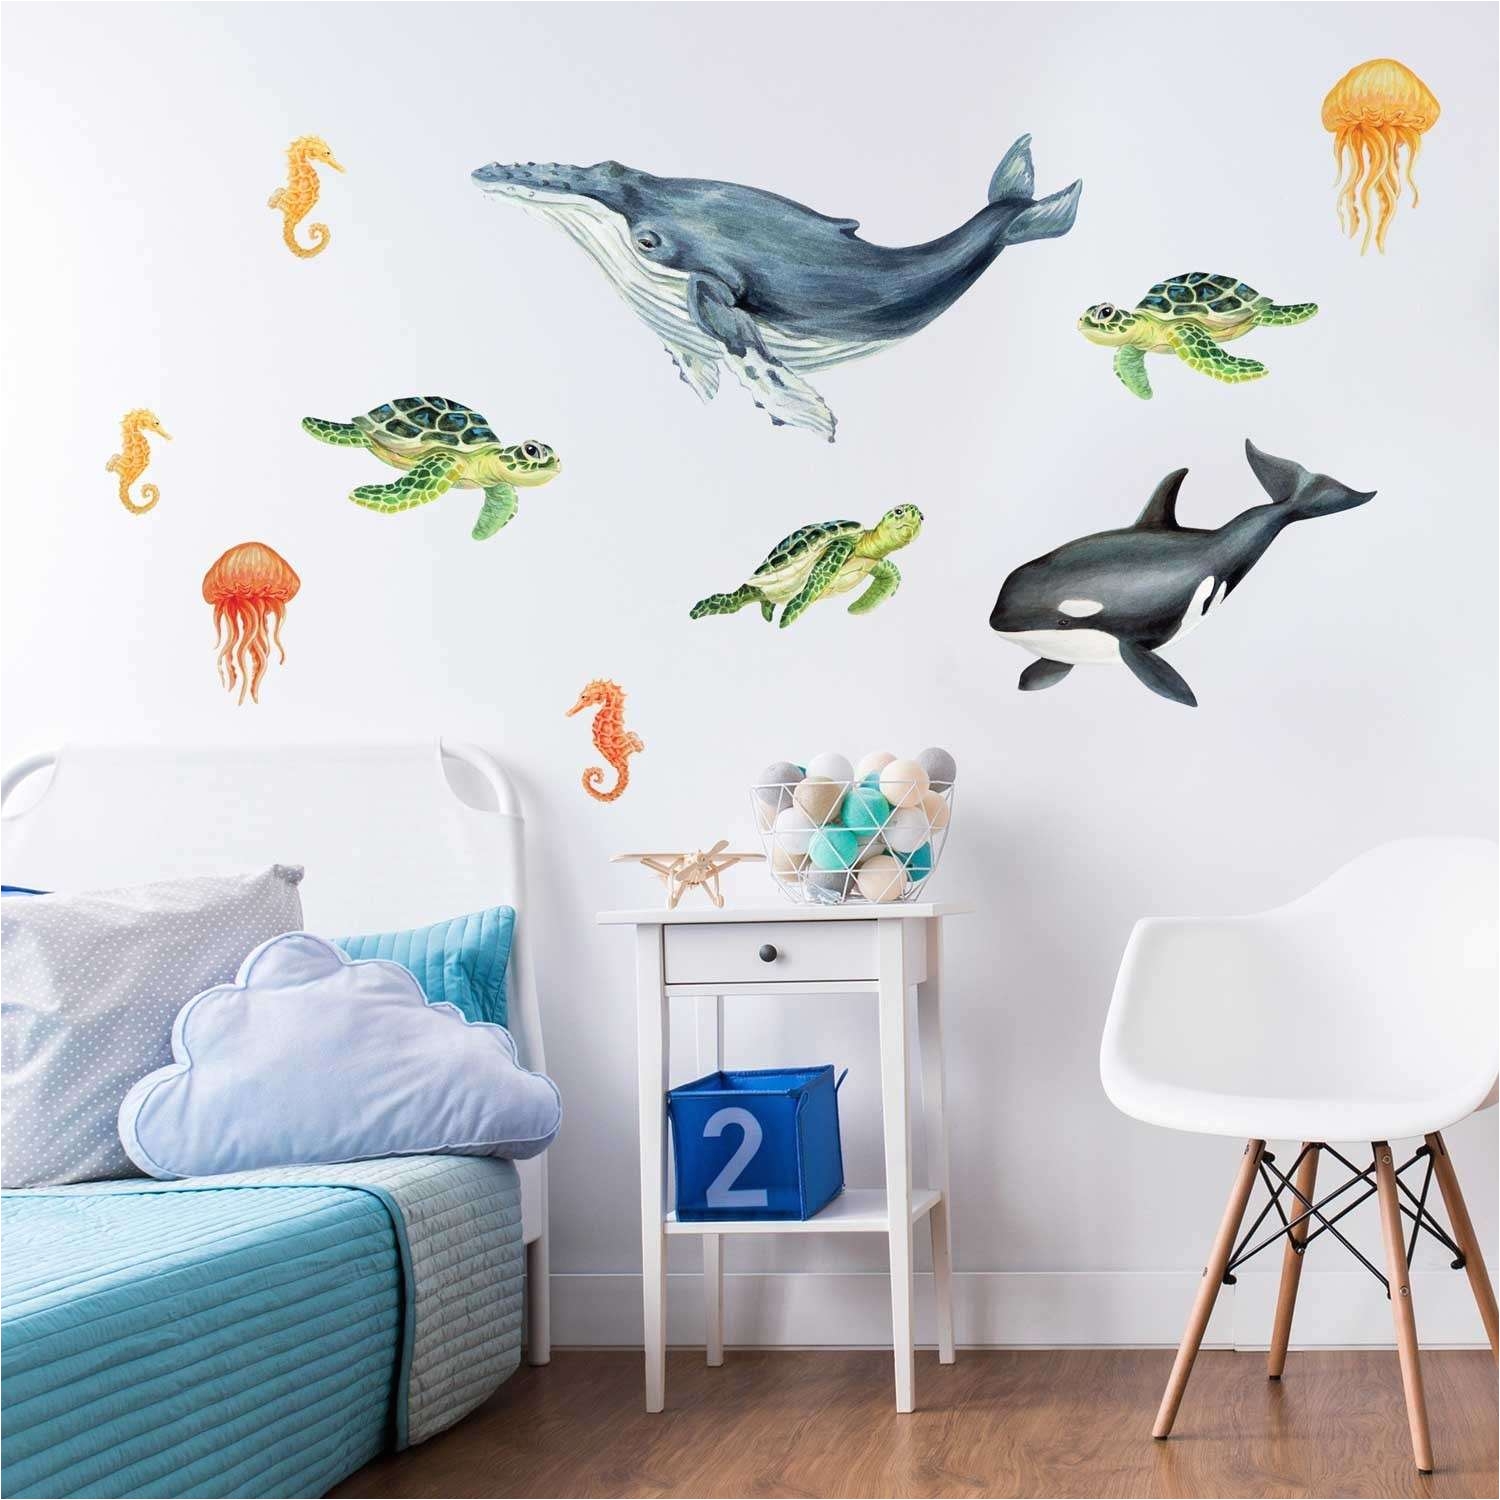 fishing bedroom decor awesome 32 elegant fish wall decals scheme bathroom wall sticker inspiration